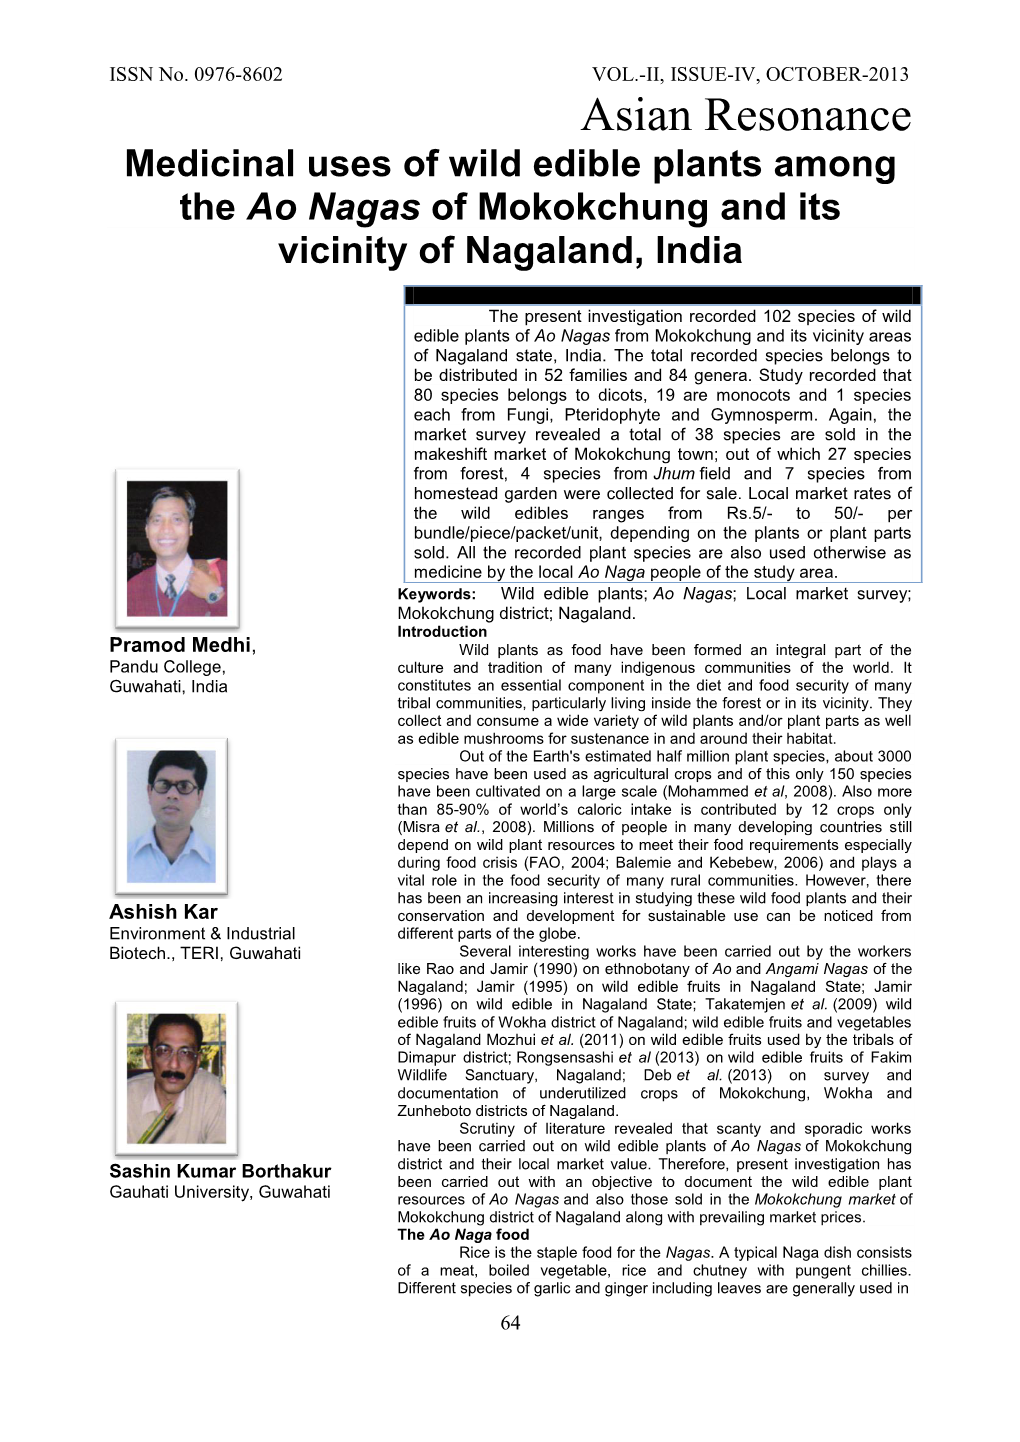 Medicinal Uses of Wild Edible Plants Among the Ao Nagas of Mokokchung and Its Vicinity of Nagaland, India